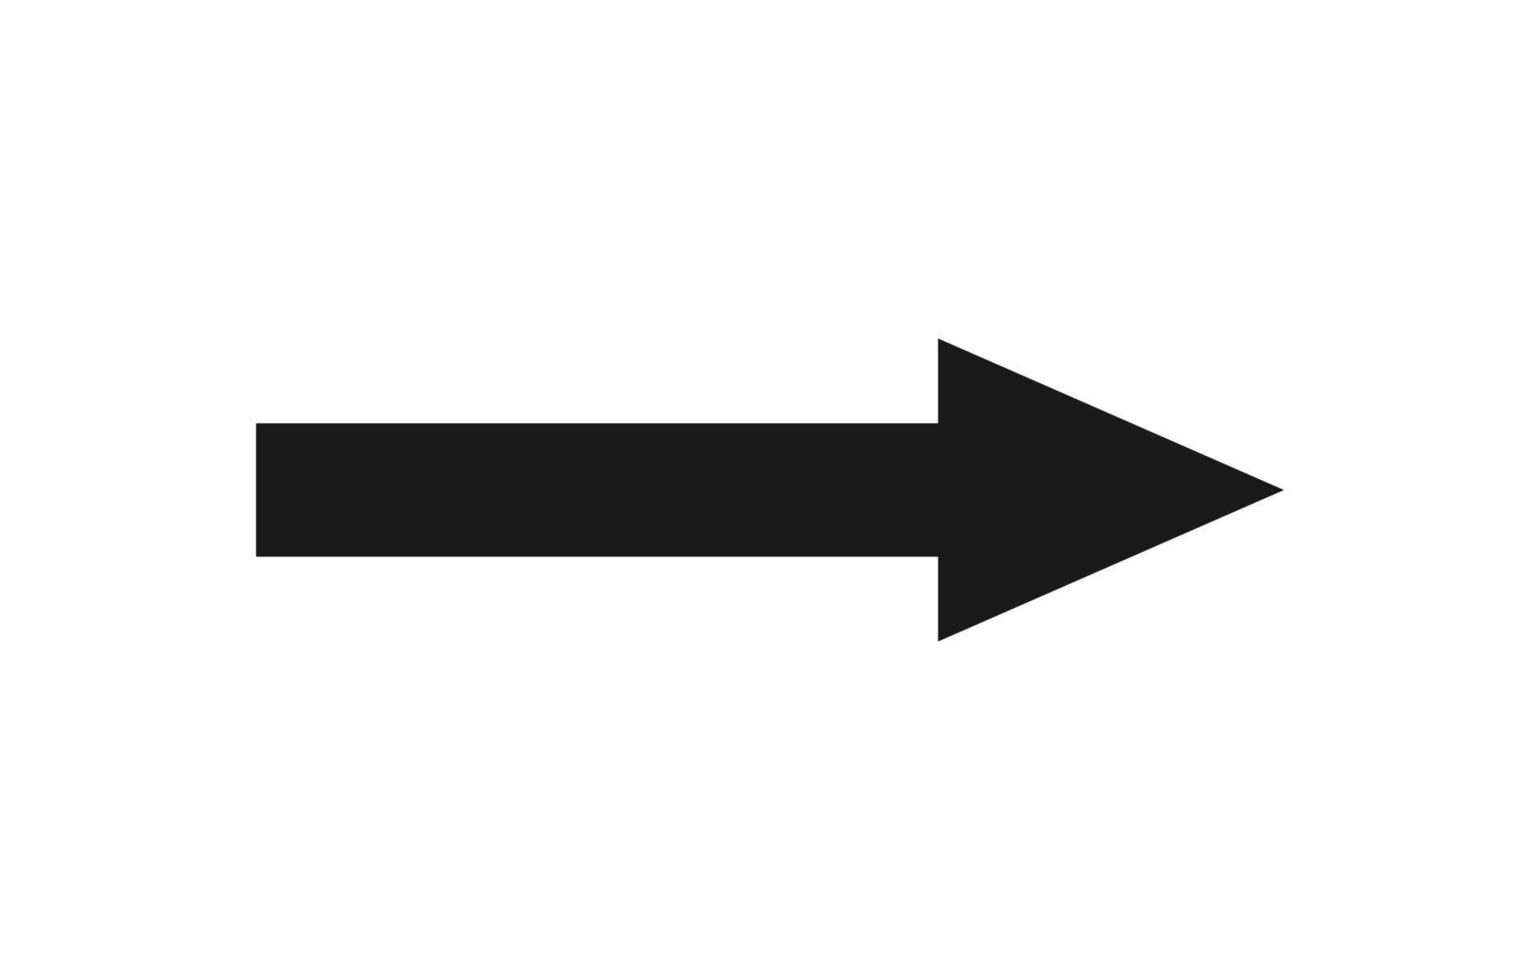 icono de vector de flecha. este símbolo plano se dibuja sobre un fondo blanco.